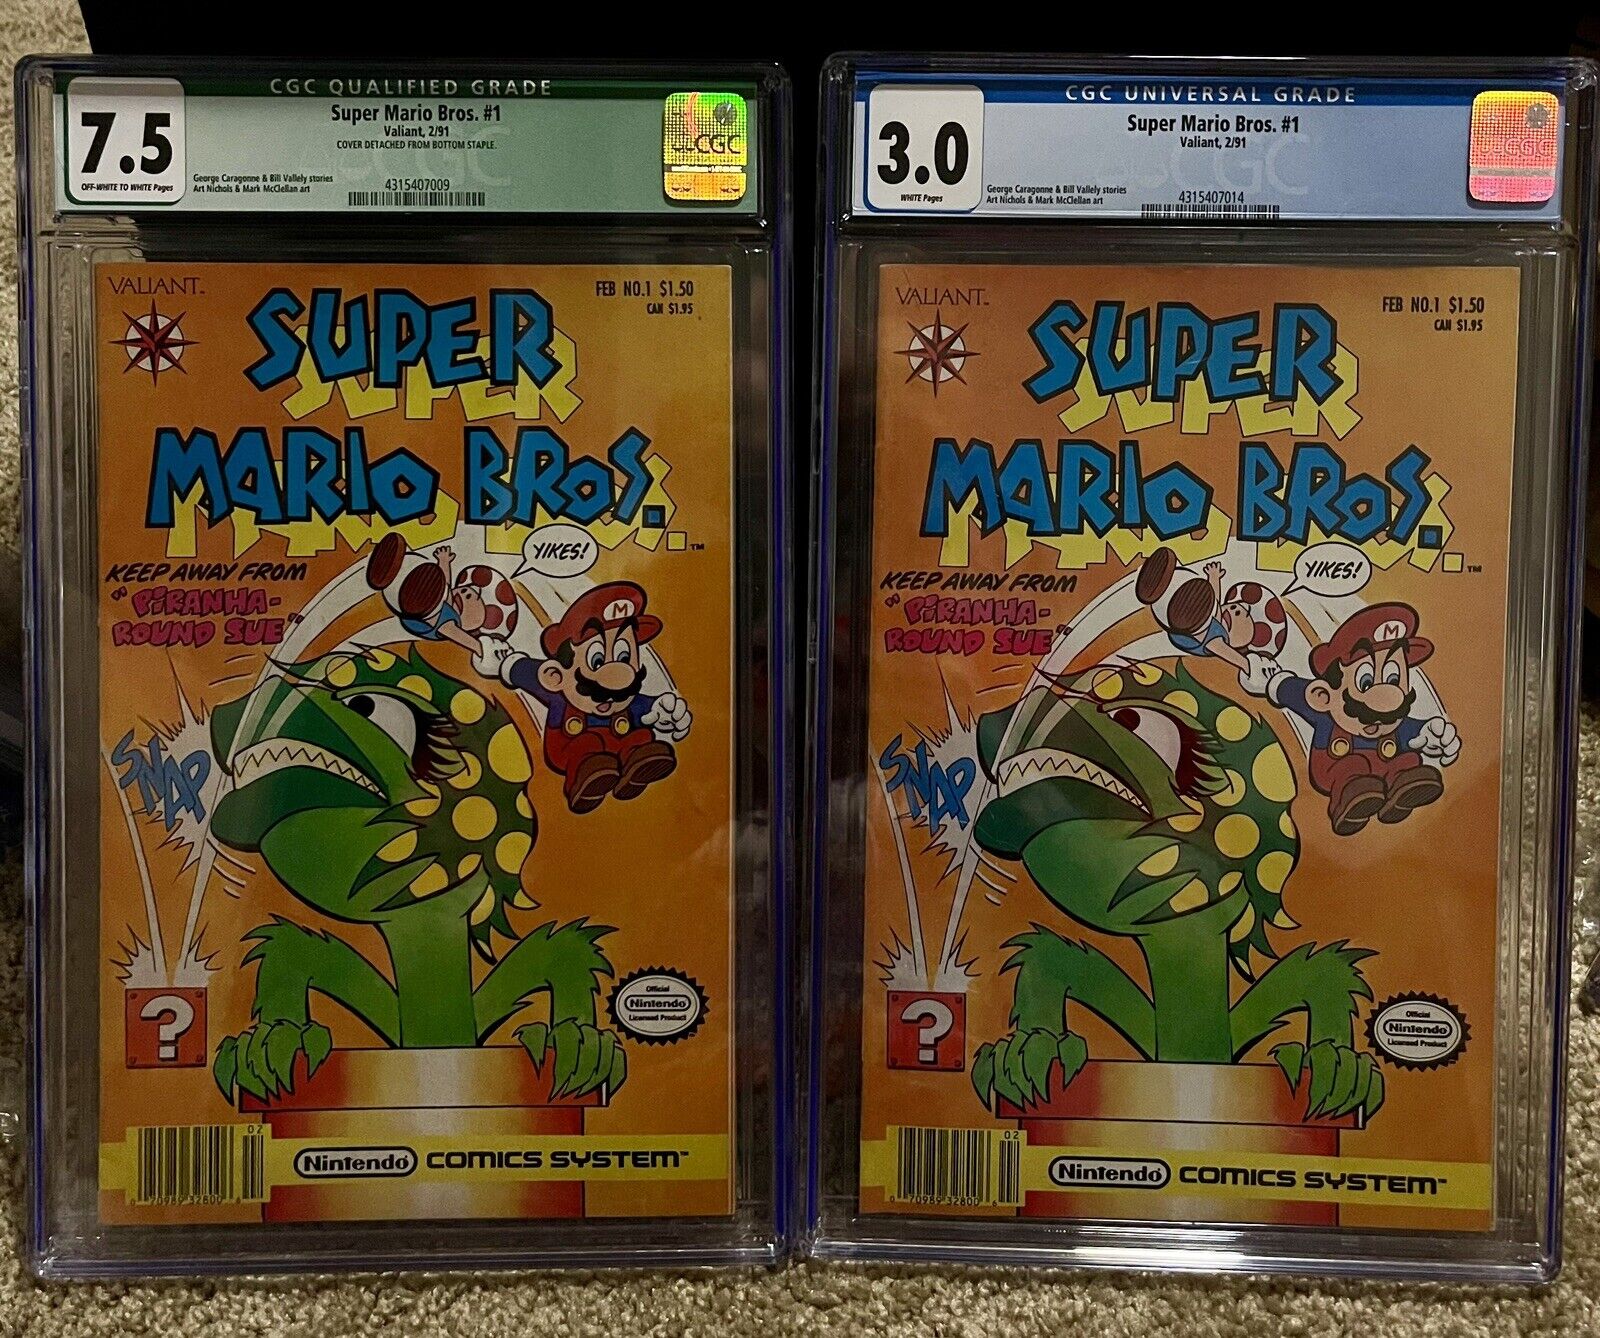 TWO Super Mario Bros #1 Valiant Comic Books graded By CGC